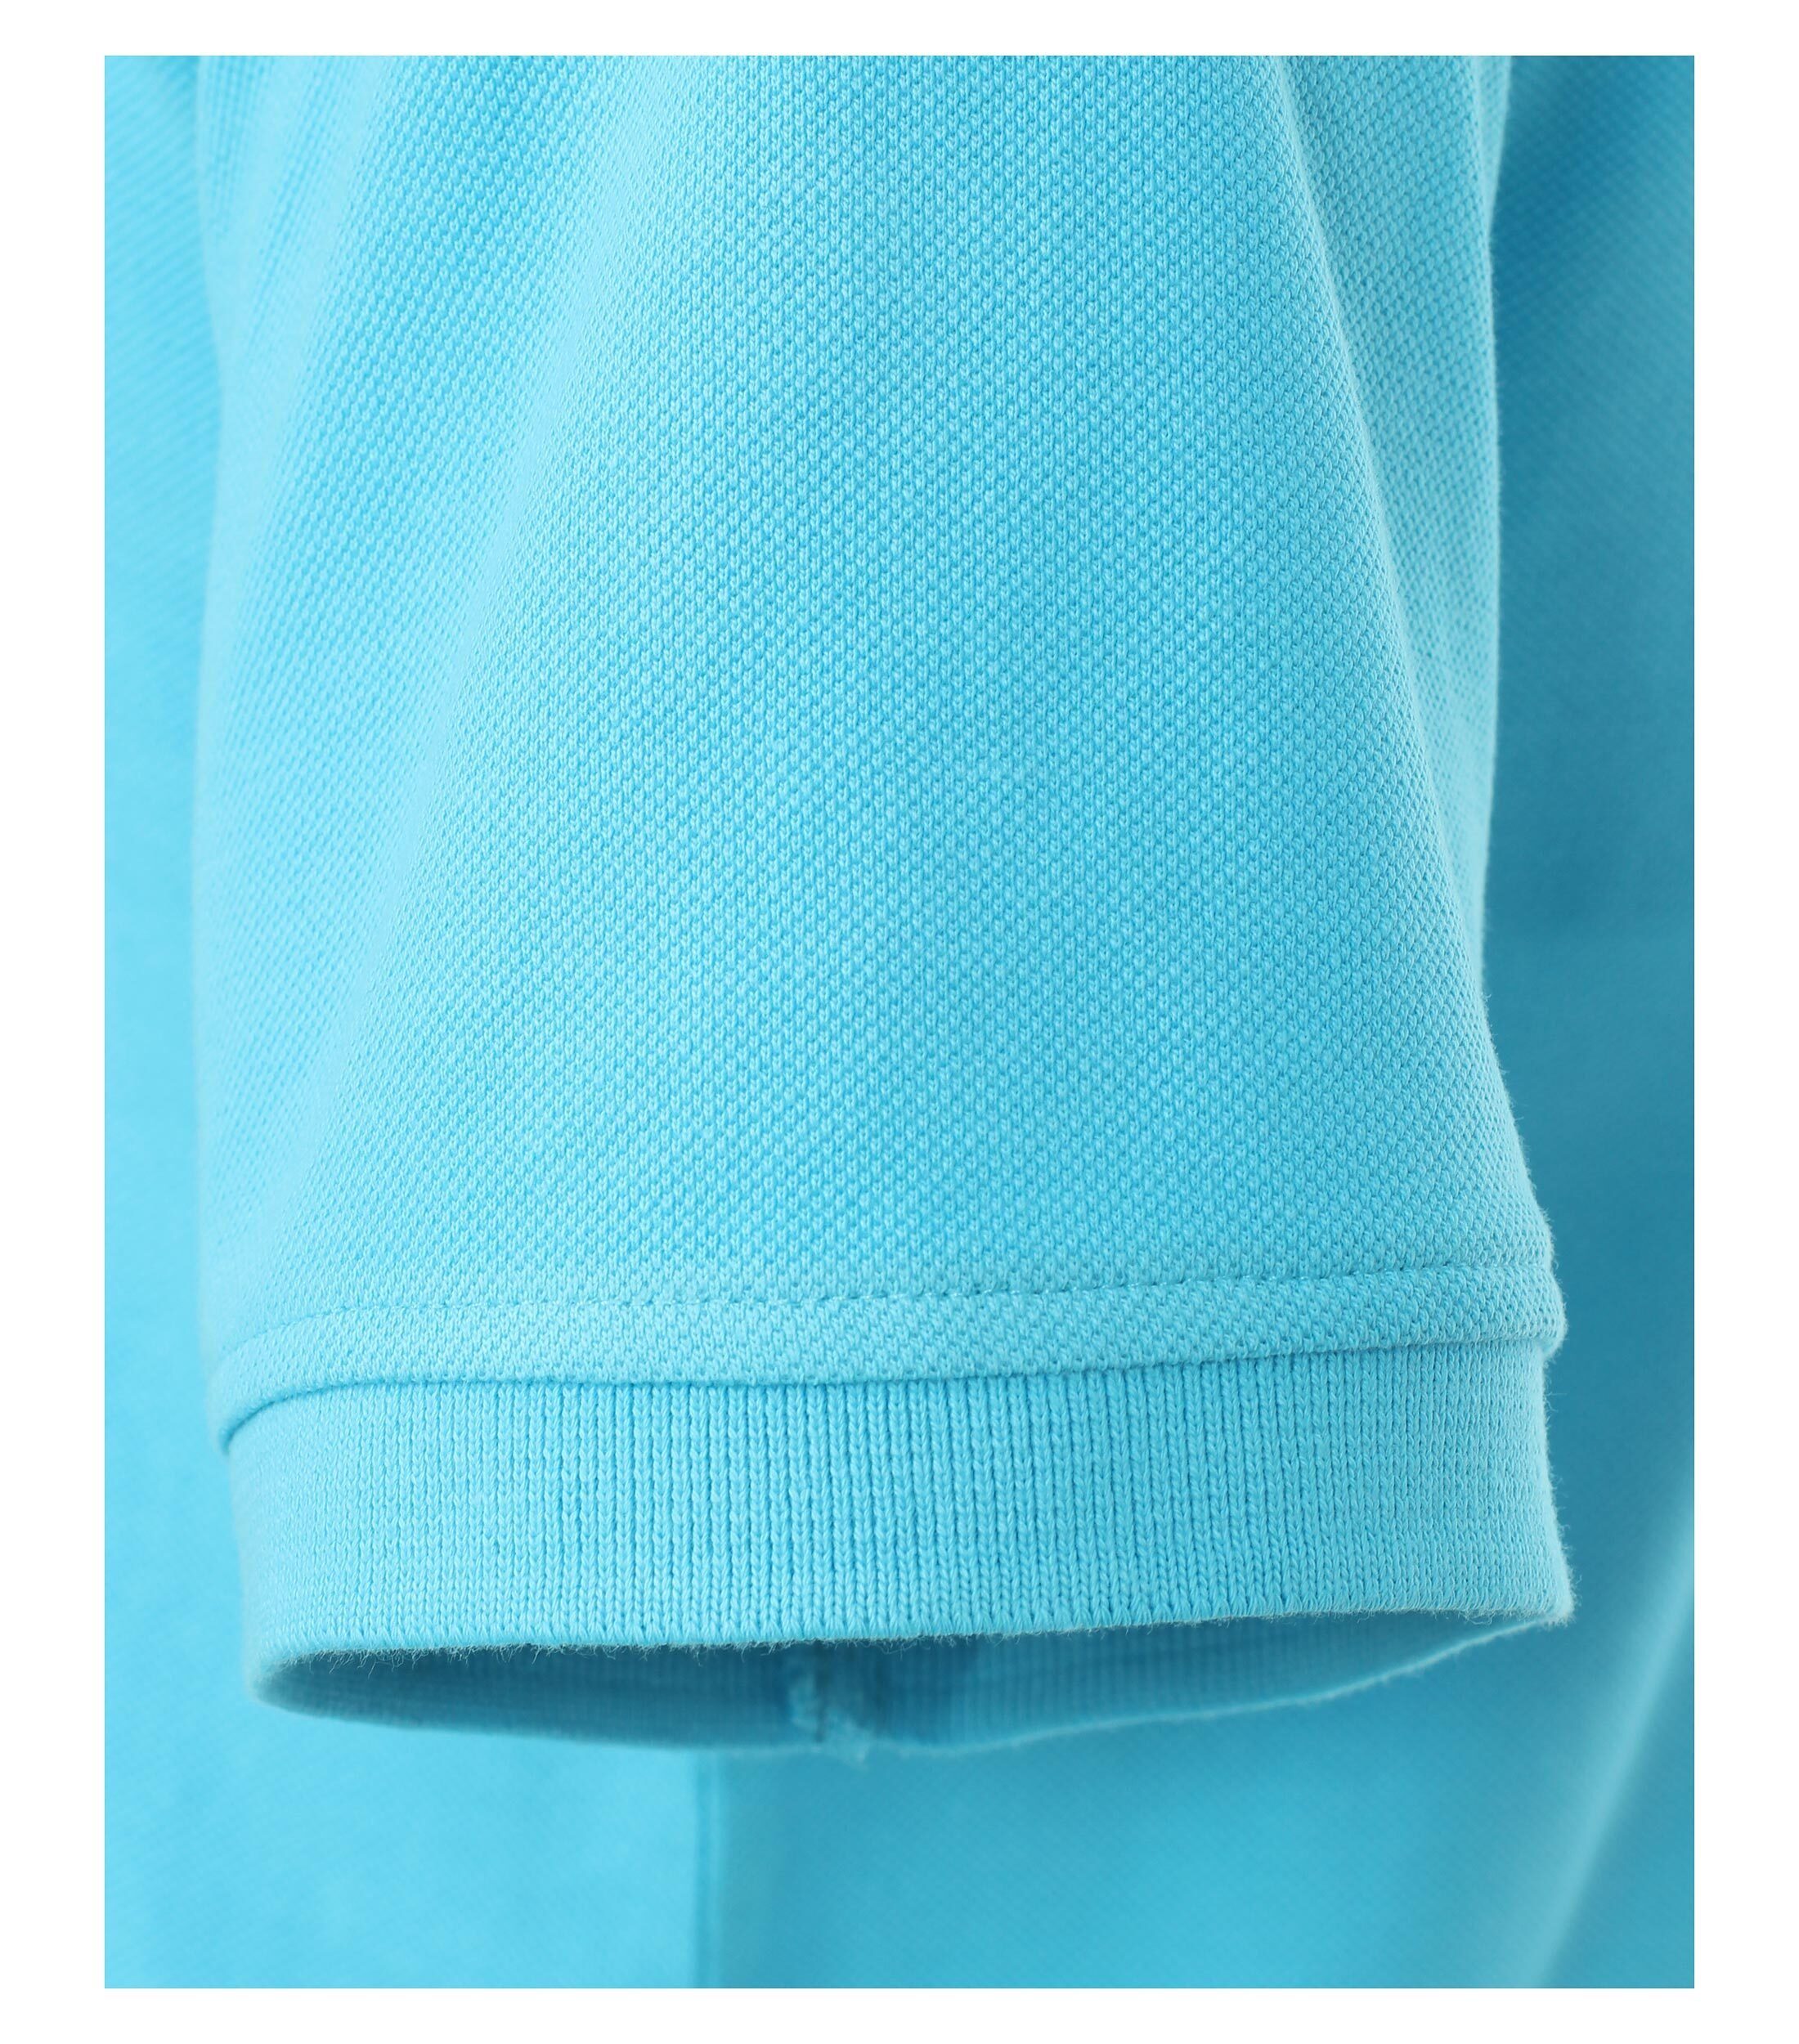 Redmond Poloshirt uni 14 blau